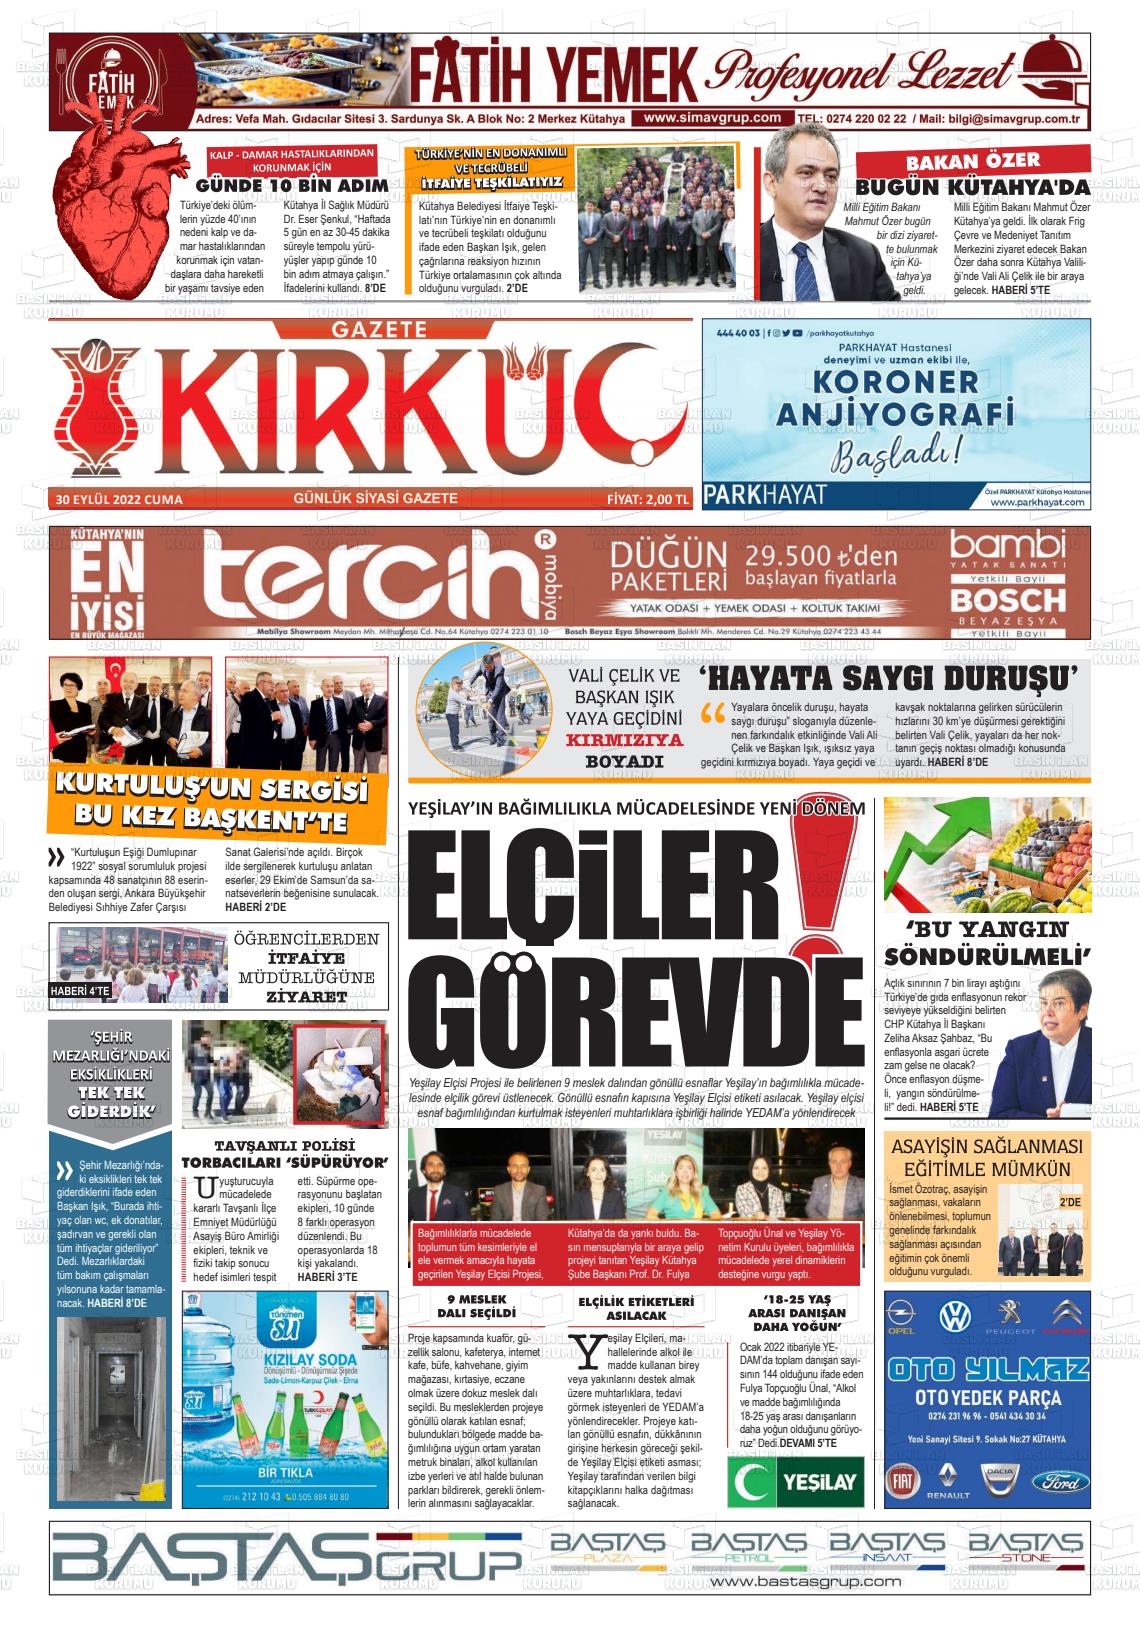 30 Eylül 2022 Gazete Kırküç Gazete Manşeti